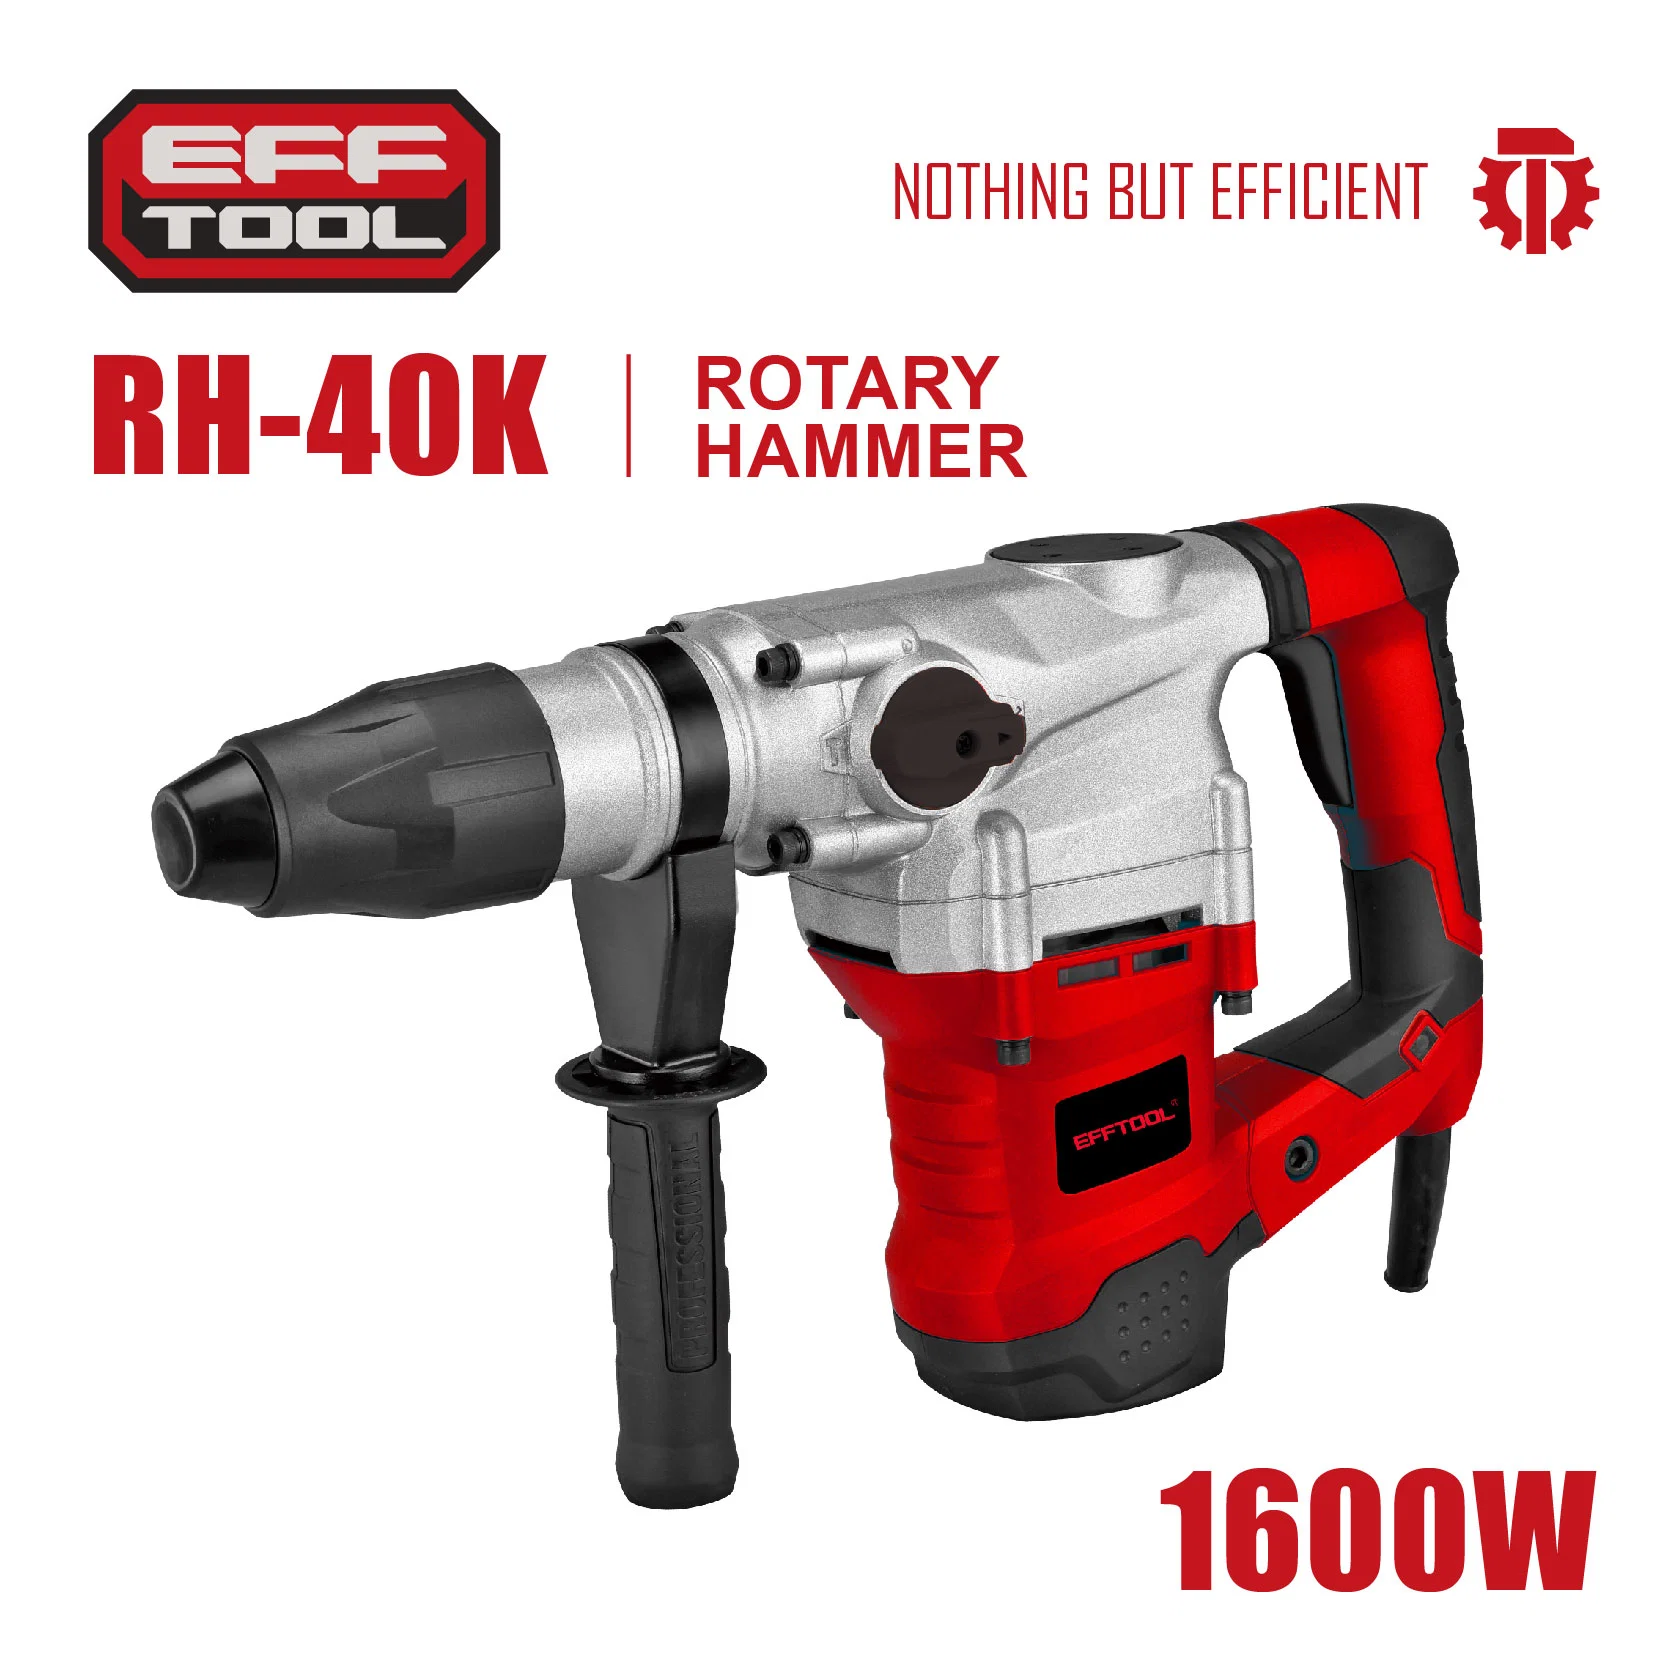 Efftool Rh-40K Corded Electric 1600W Rotary Hammer Drill